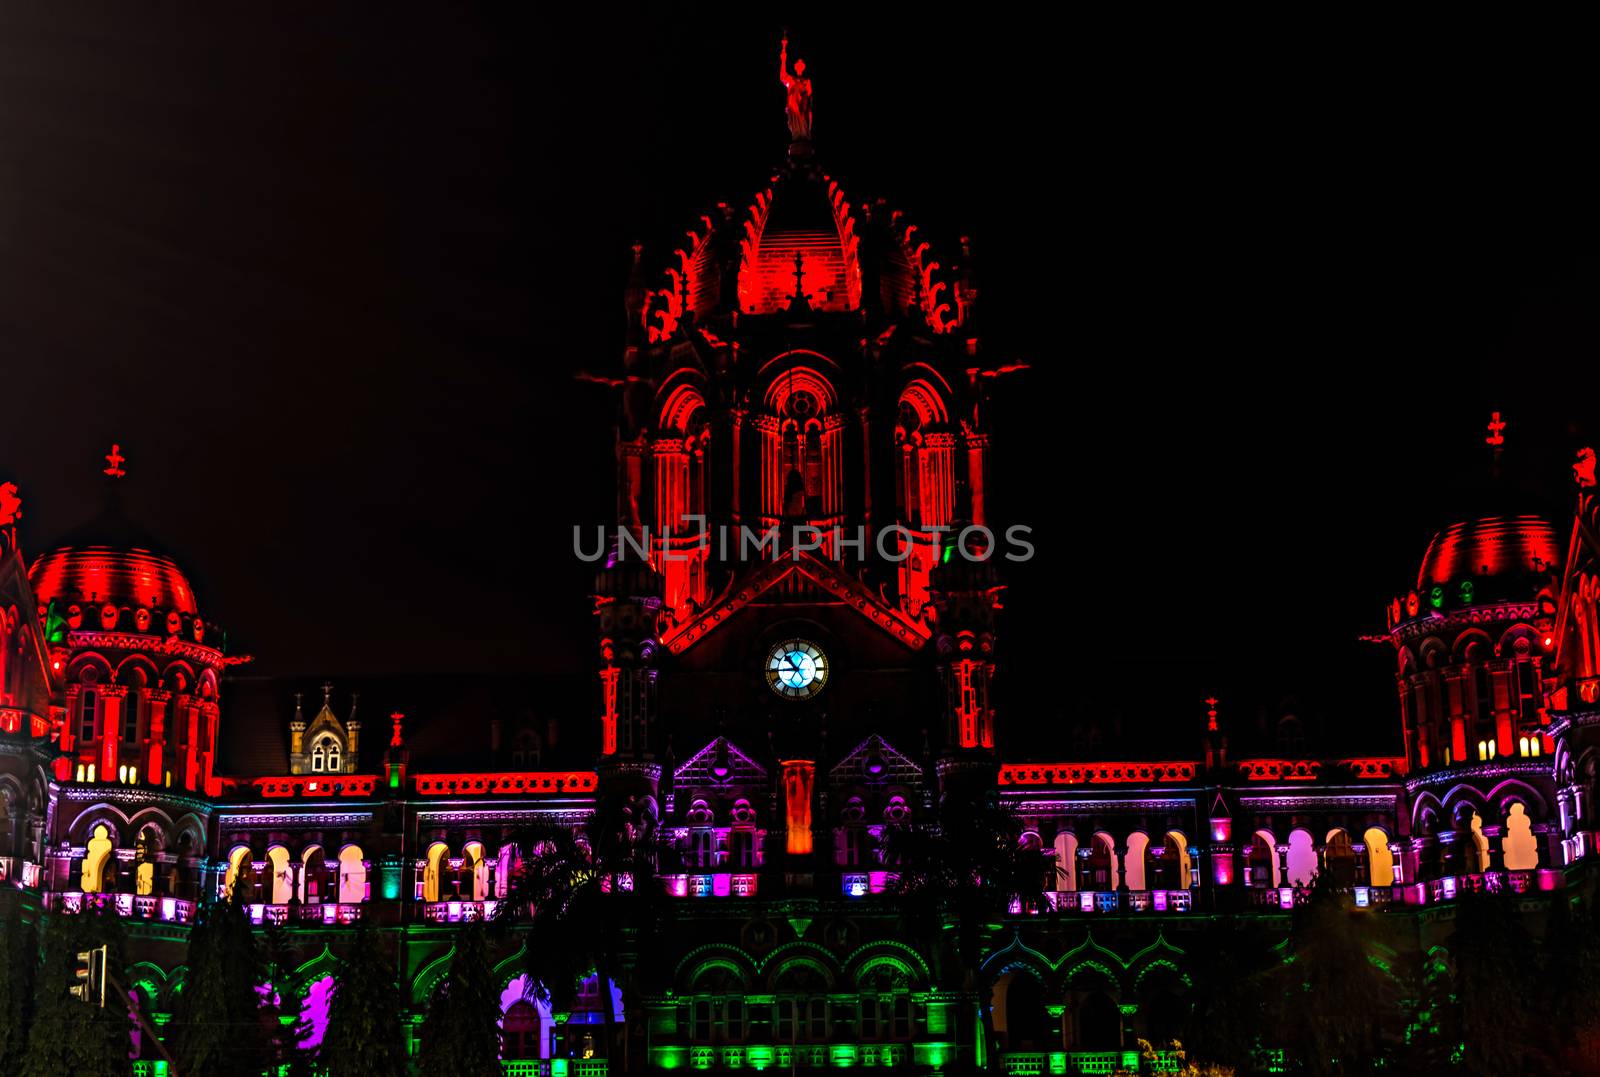 UNESCO world heritage building of `Chatrapati Shivaji Maharaj Terminus` railway station illuminated resembling like Indian flag